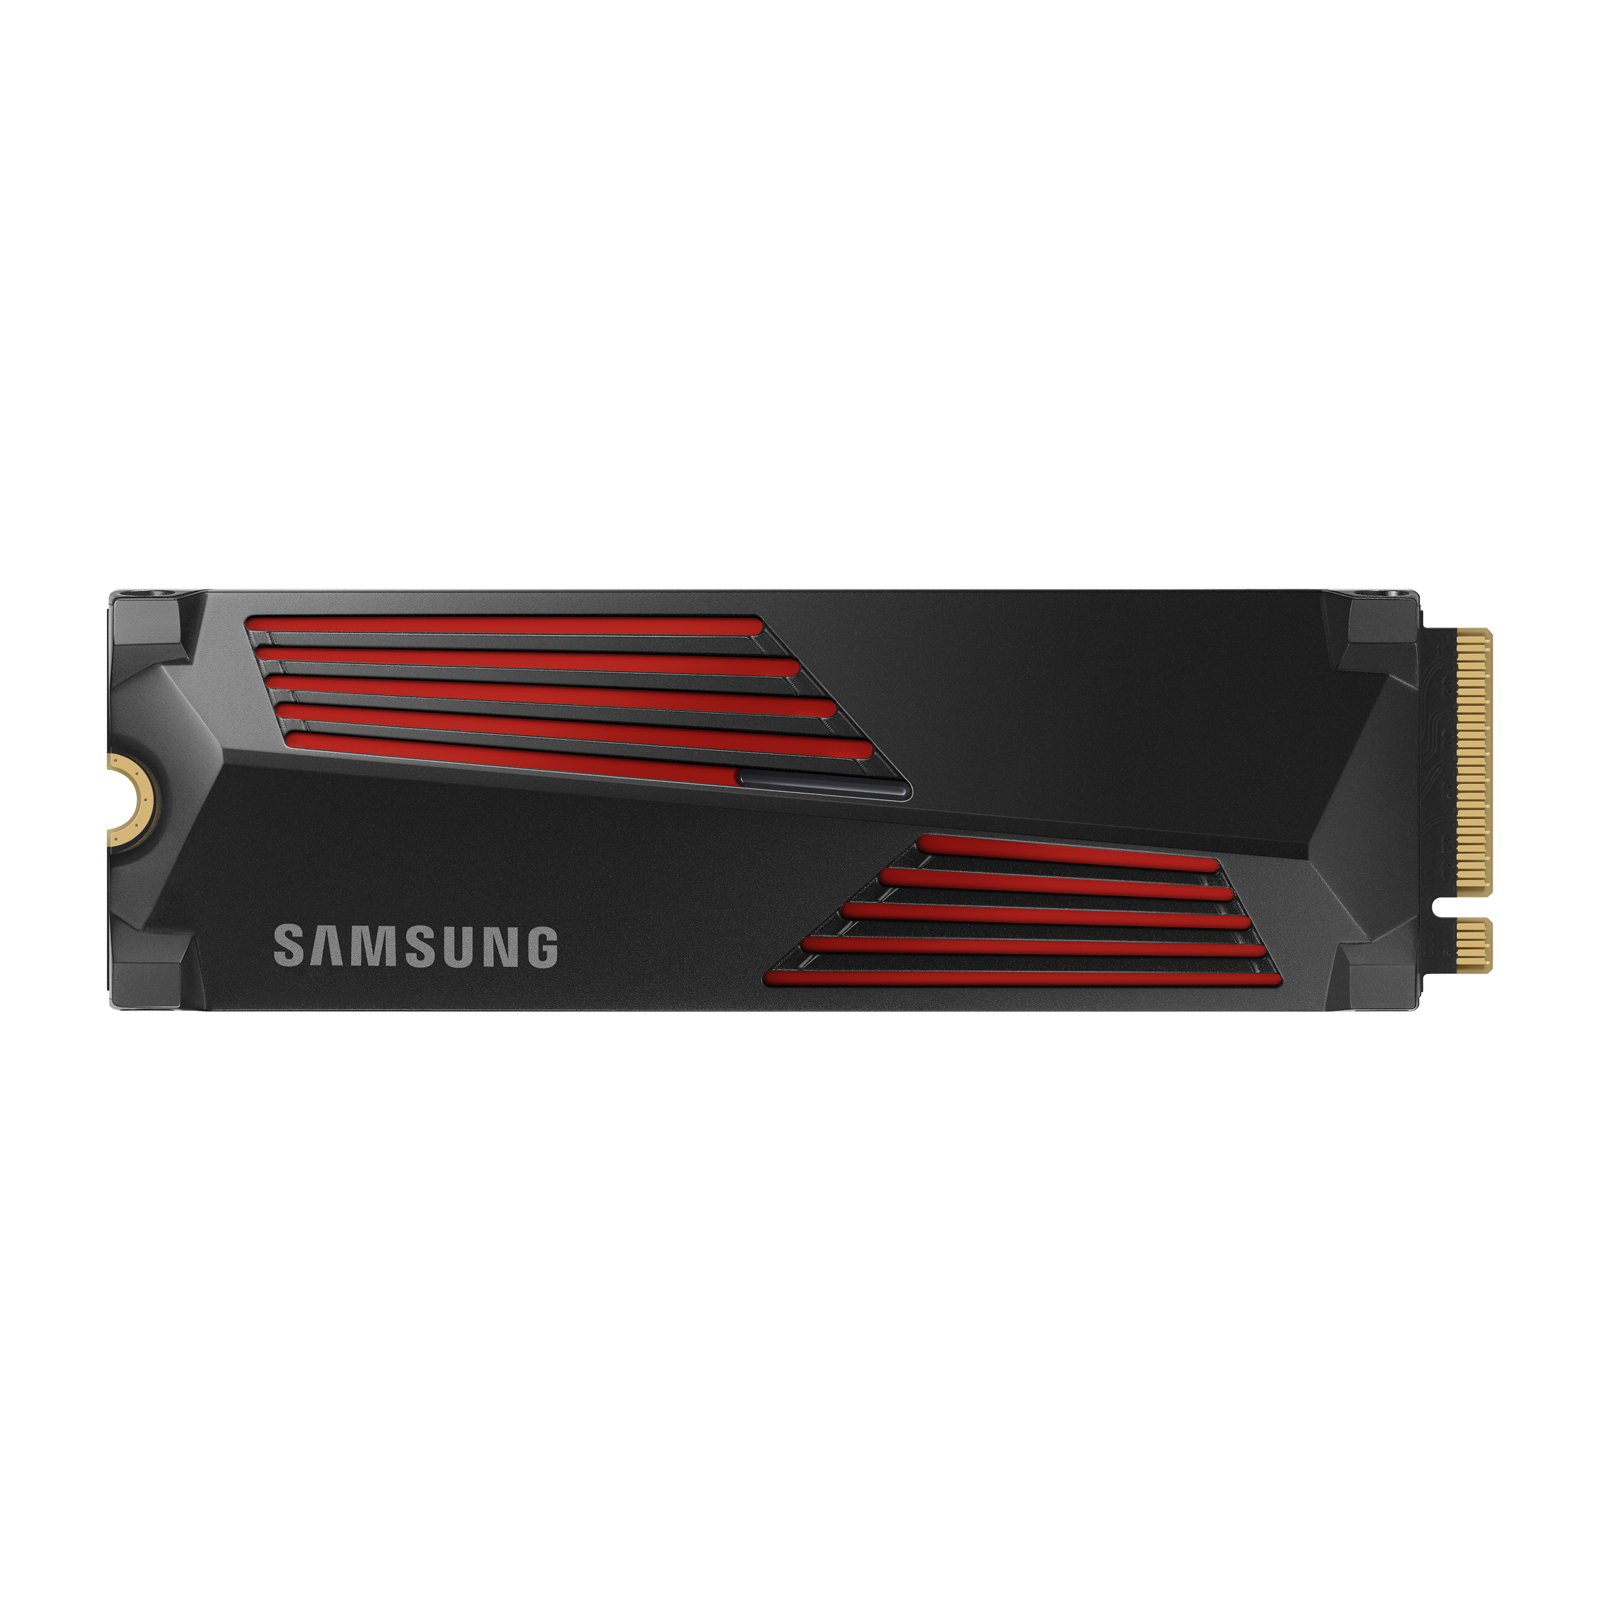 Samsung NVMe M.2 SSD 990 PRO with Heatsink (4TB)